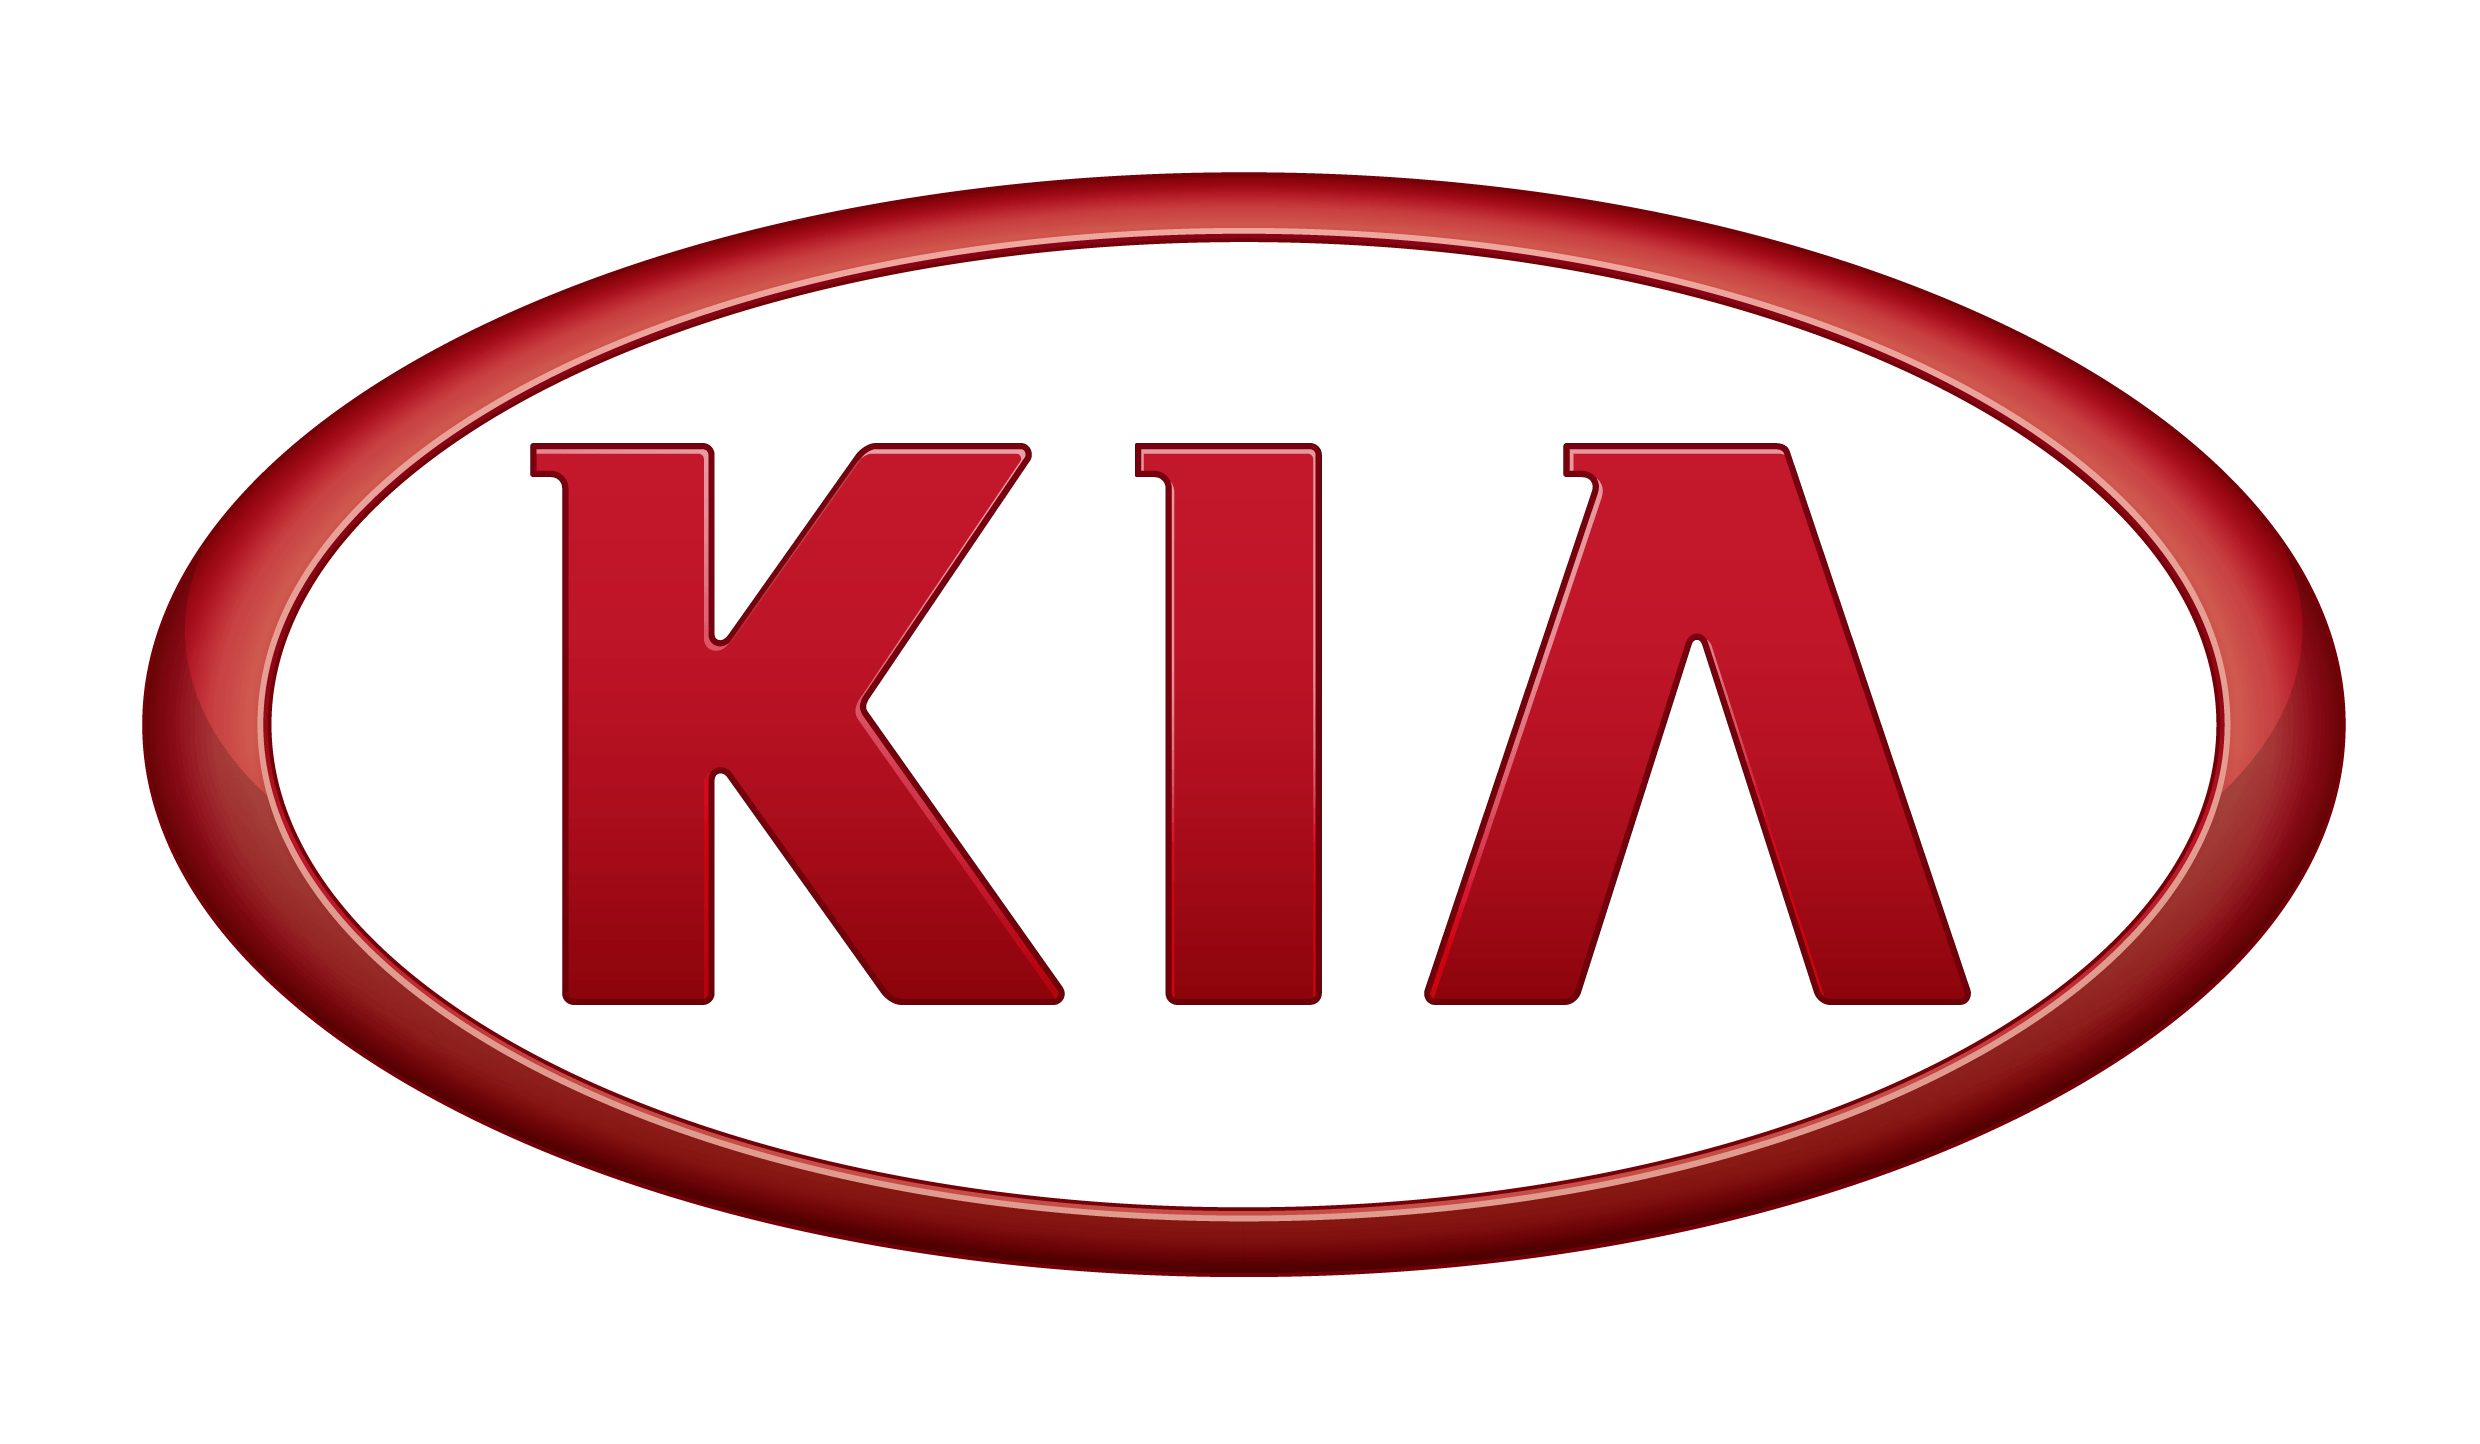 Red Circle Auto Logo - Kia Logo, Kia Car Symbol Meaning and History | Car Brand Names.com